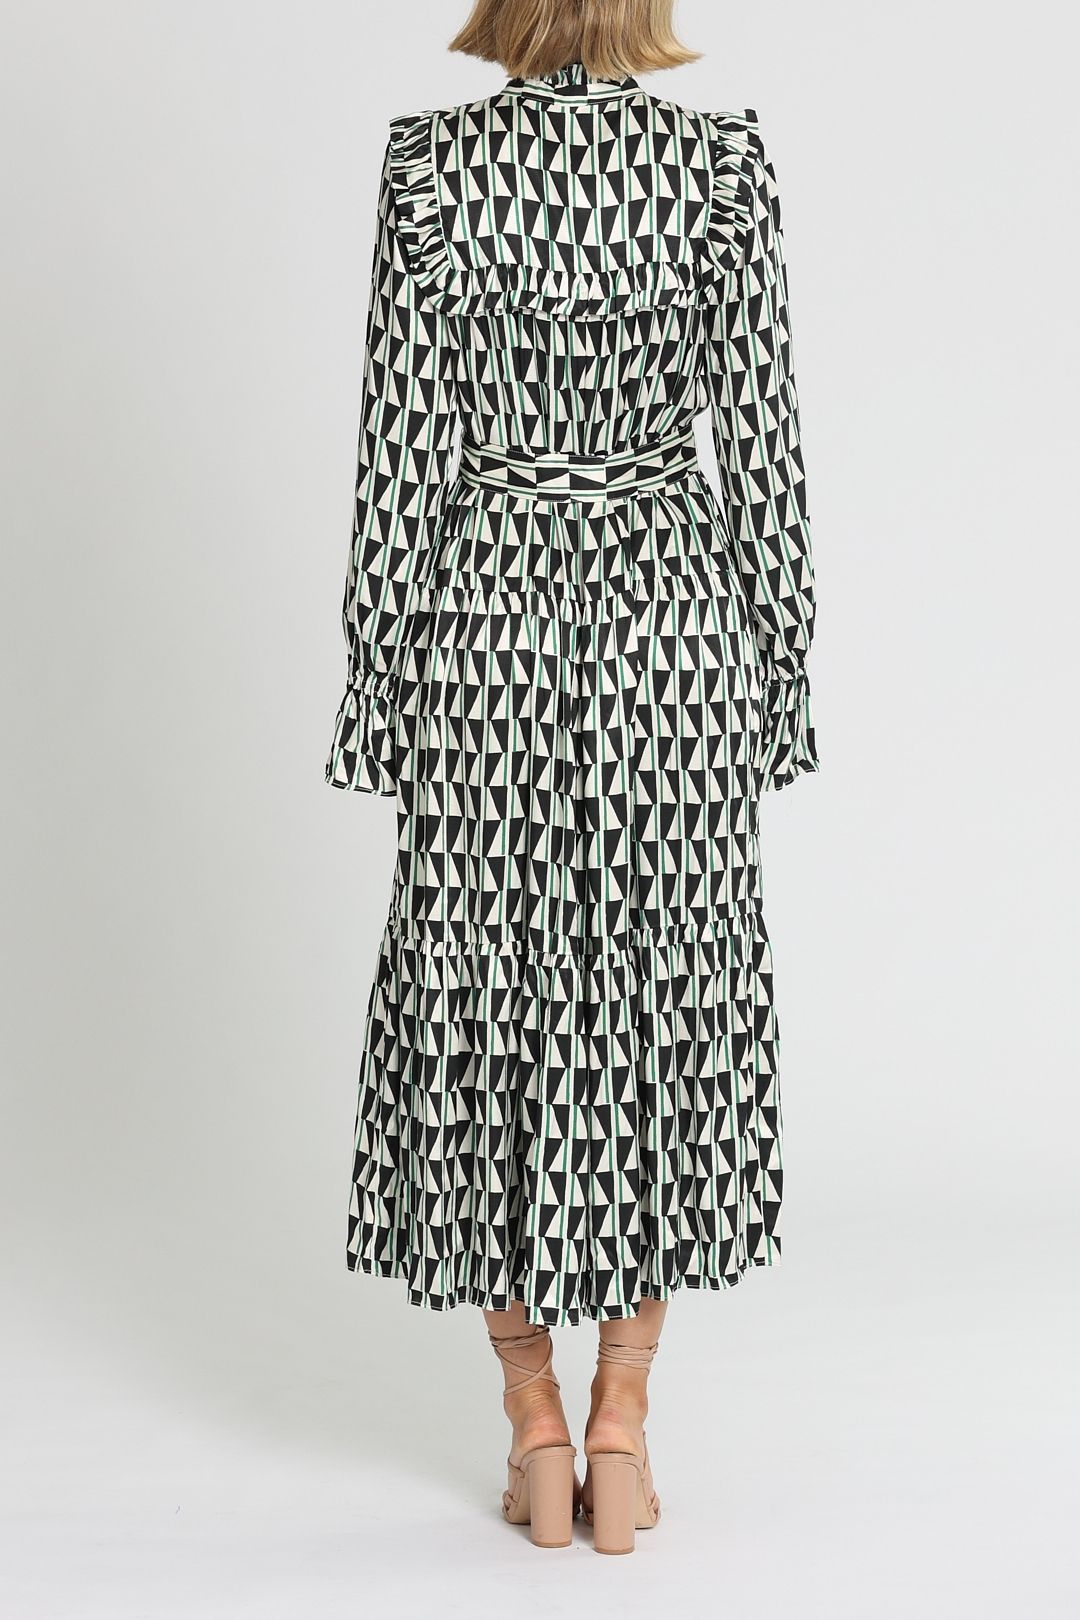 Kitri Mandy Green Tile Print Maxi Dress Ruffle